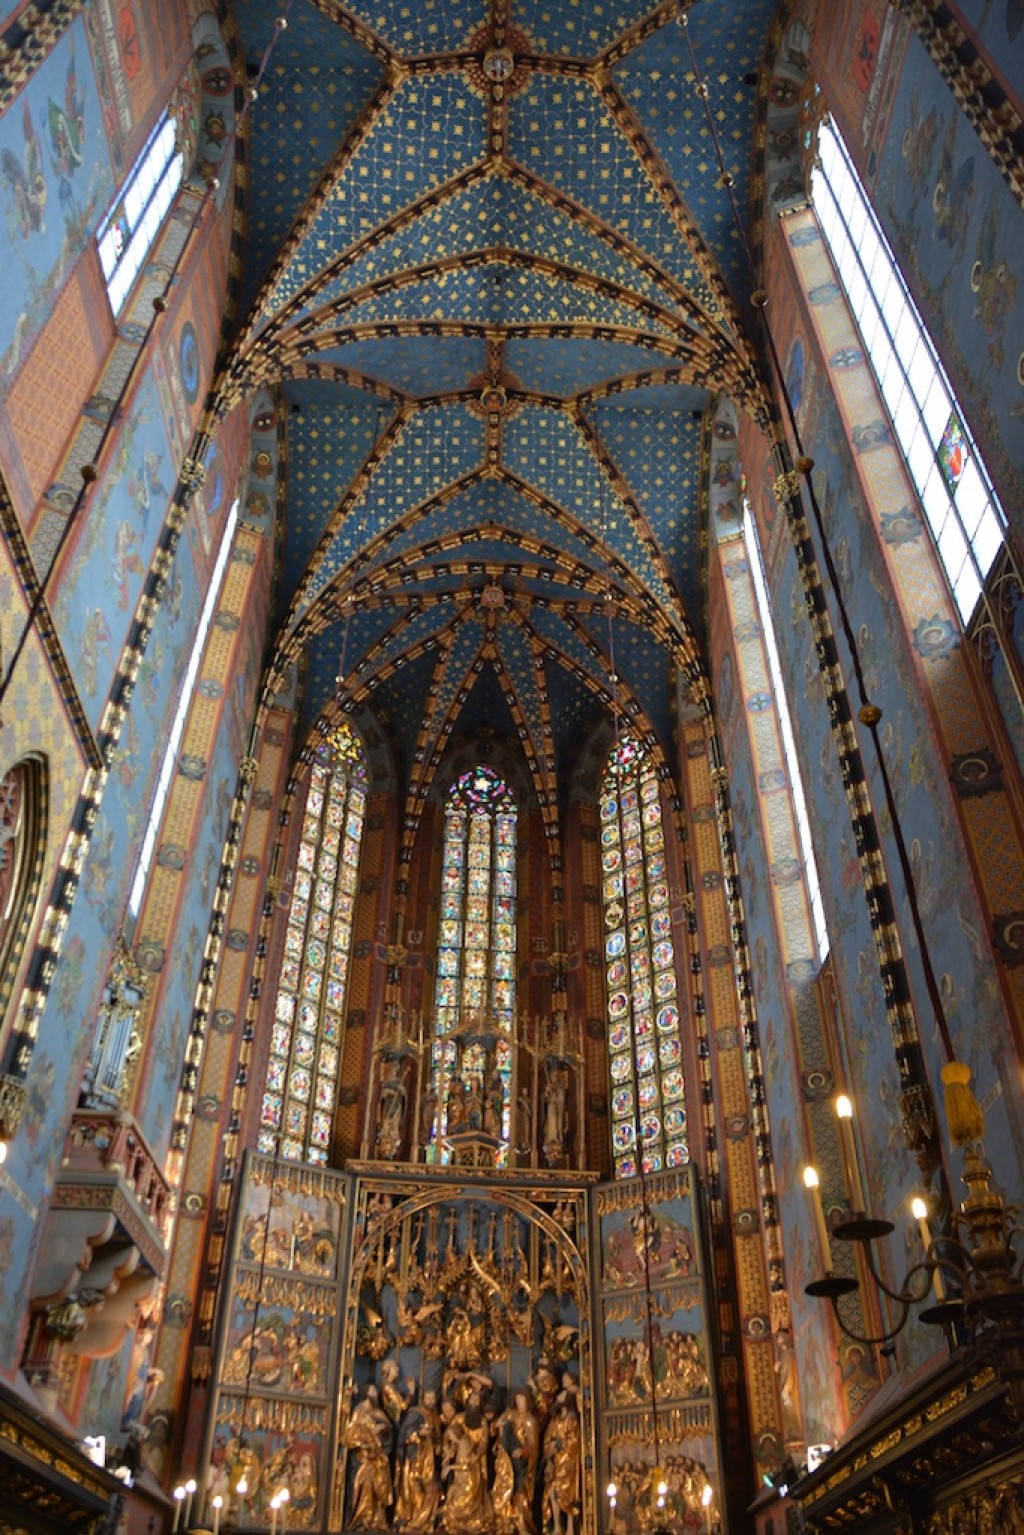 Inside St. Mary's Basilica
